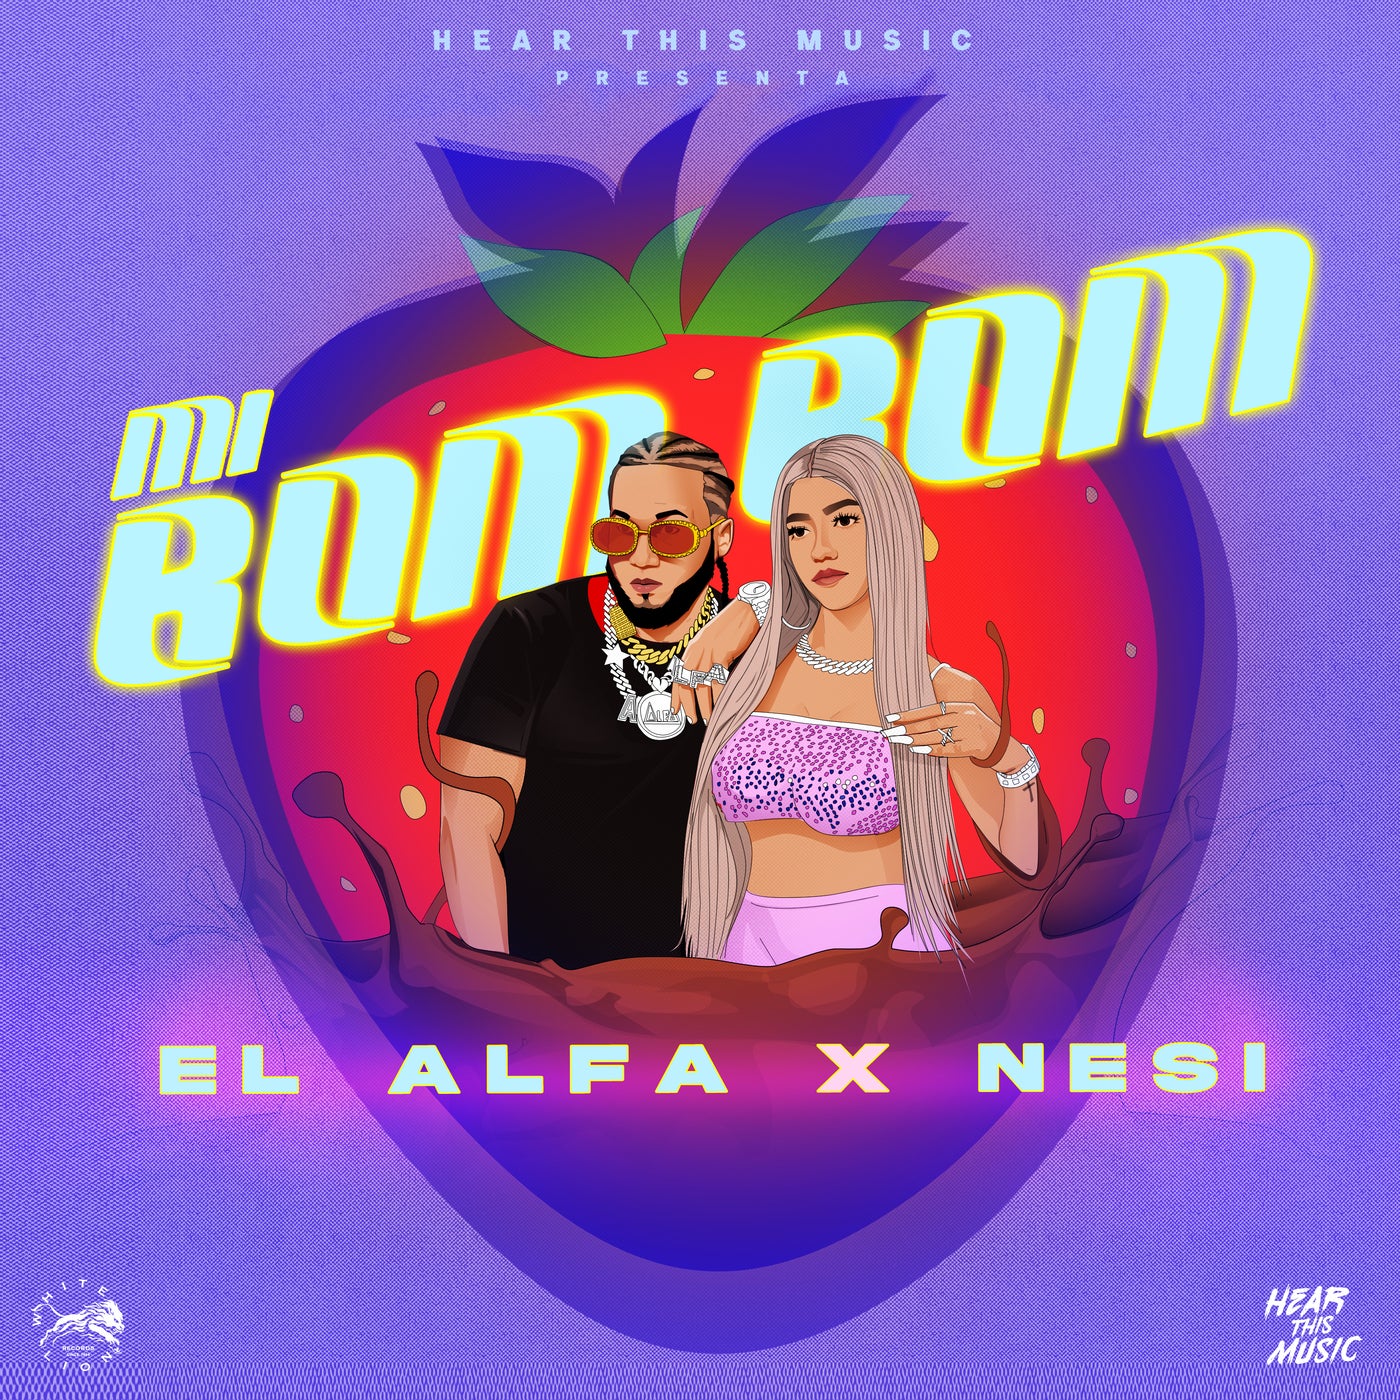 Mi Bom Bom by El Alfa and Nesi on Beatsource